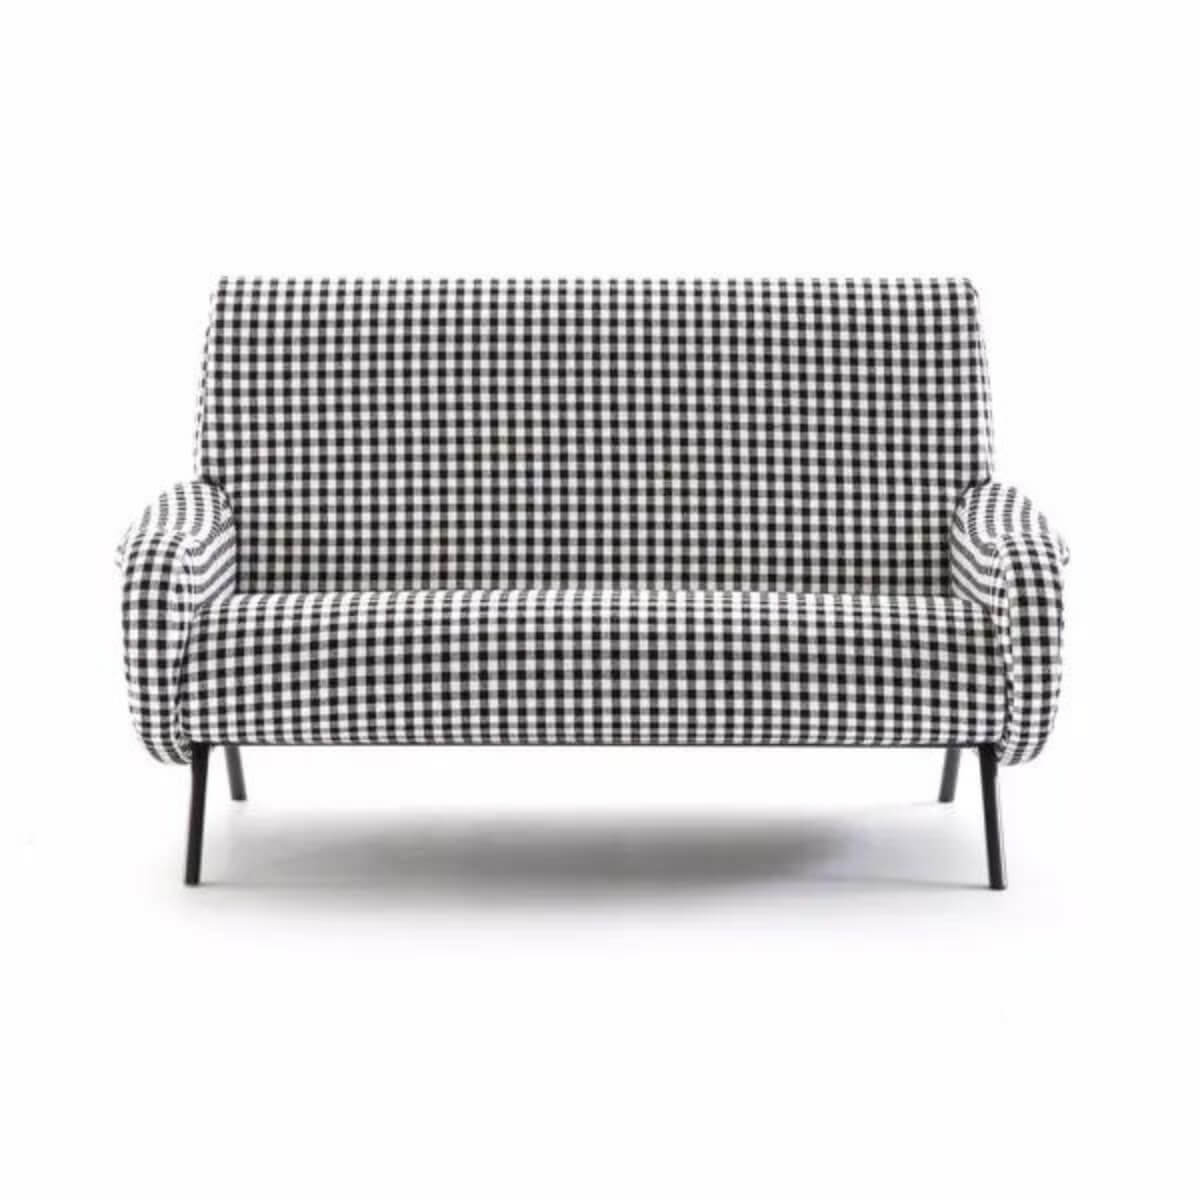 PlumePrestige Luxurious Stylish Cotton Linen Lounge Chair